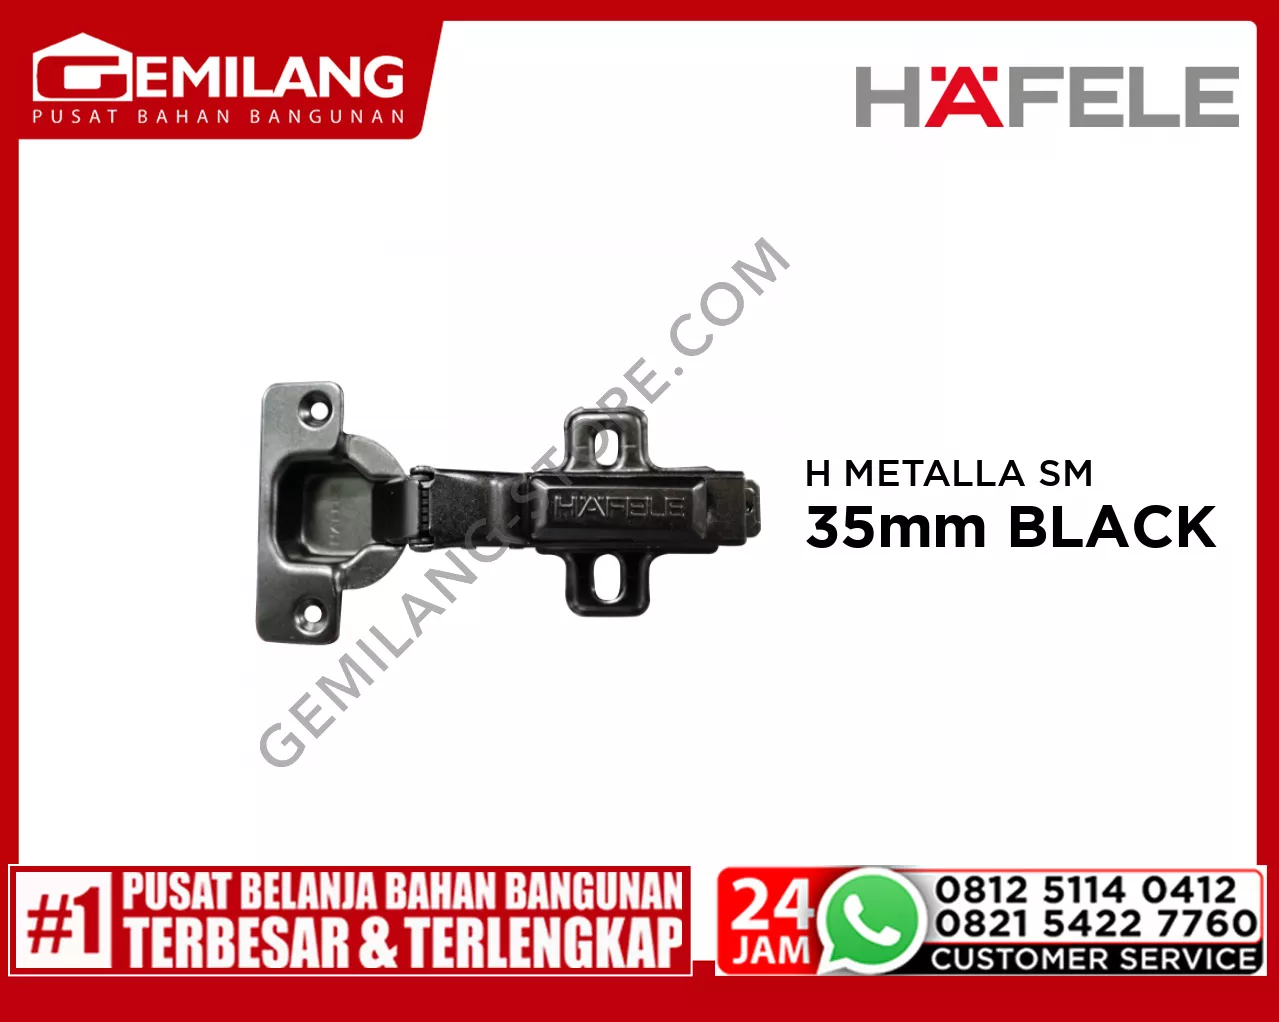 HAFELE HINGE METALLA SM 110 CUP 35mm BLACK (30600009)